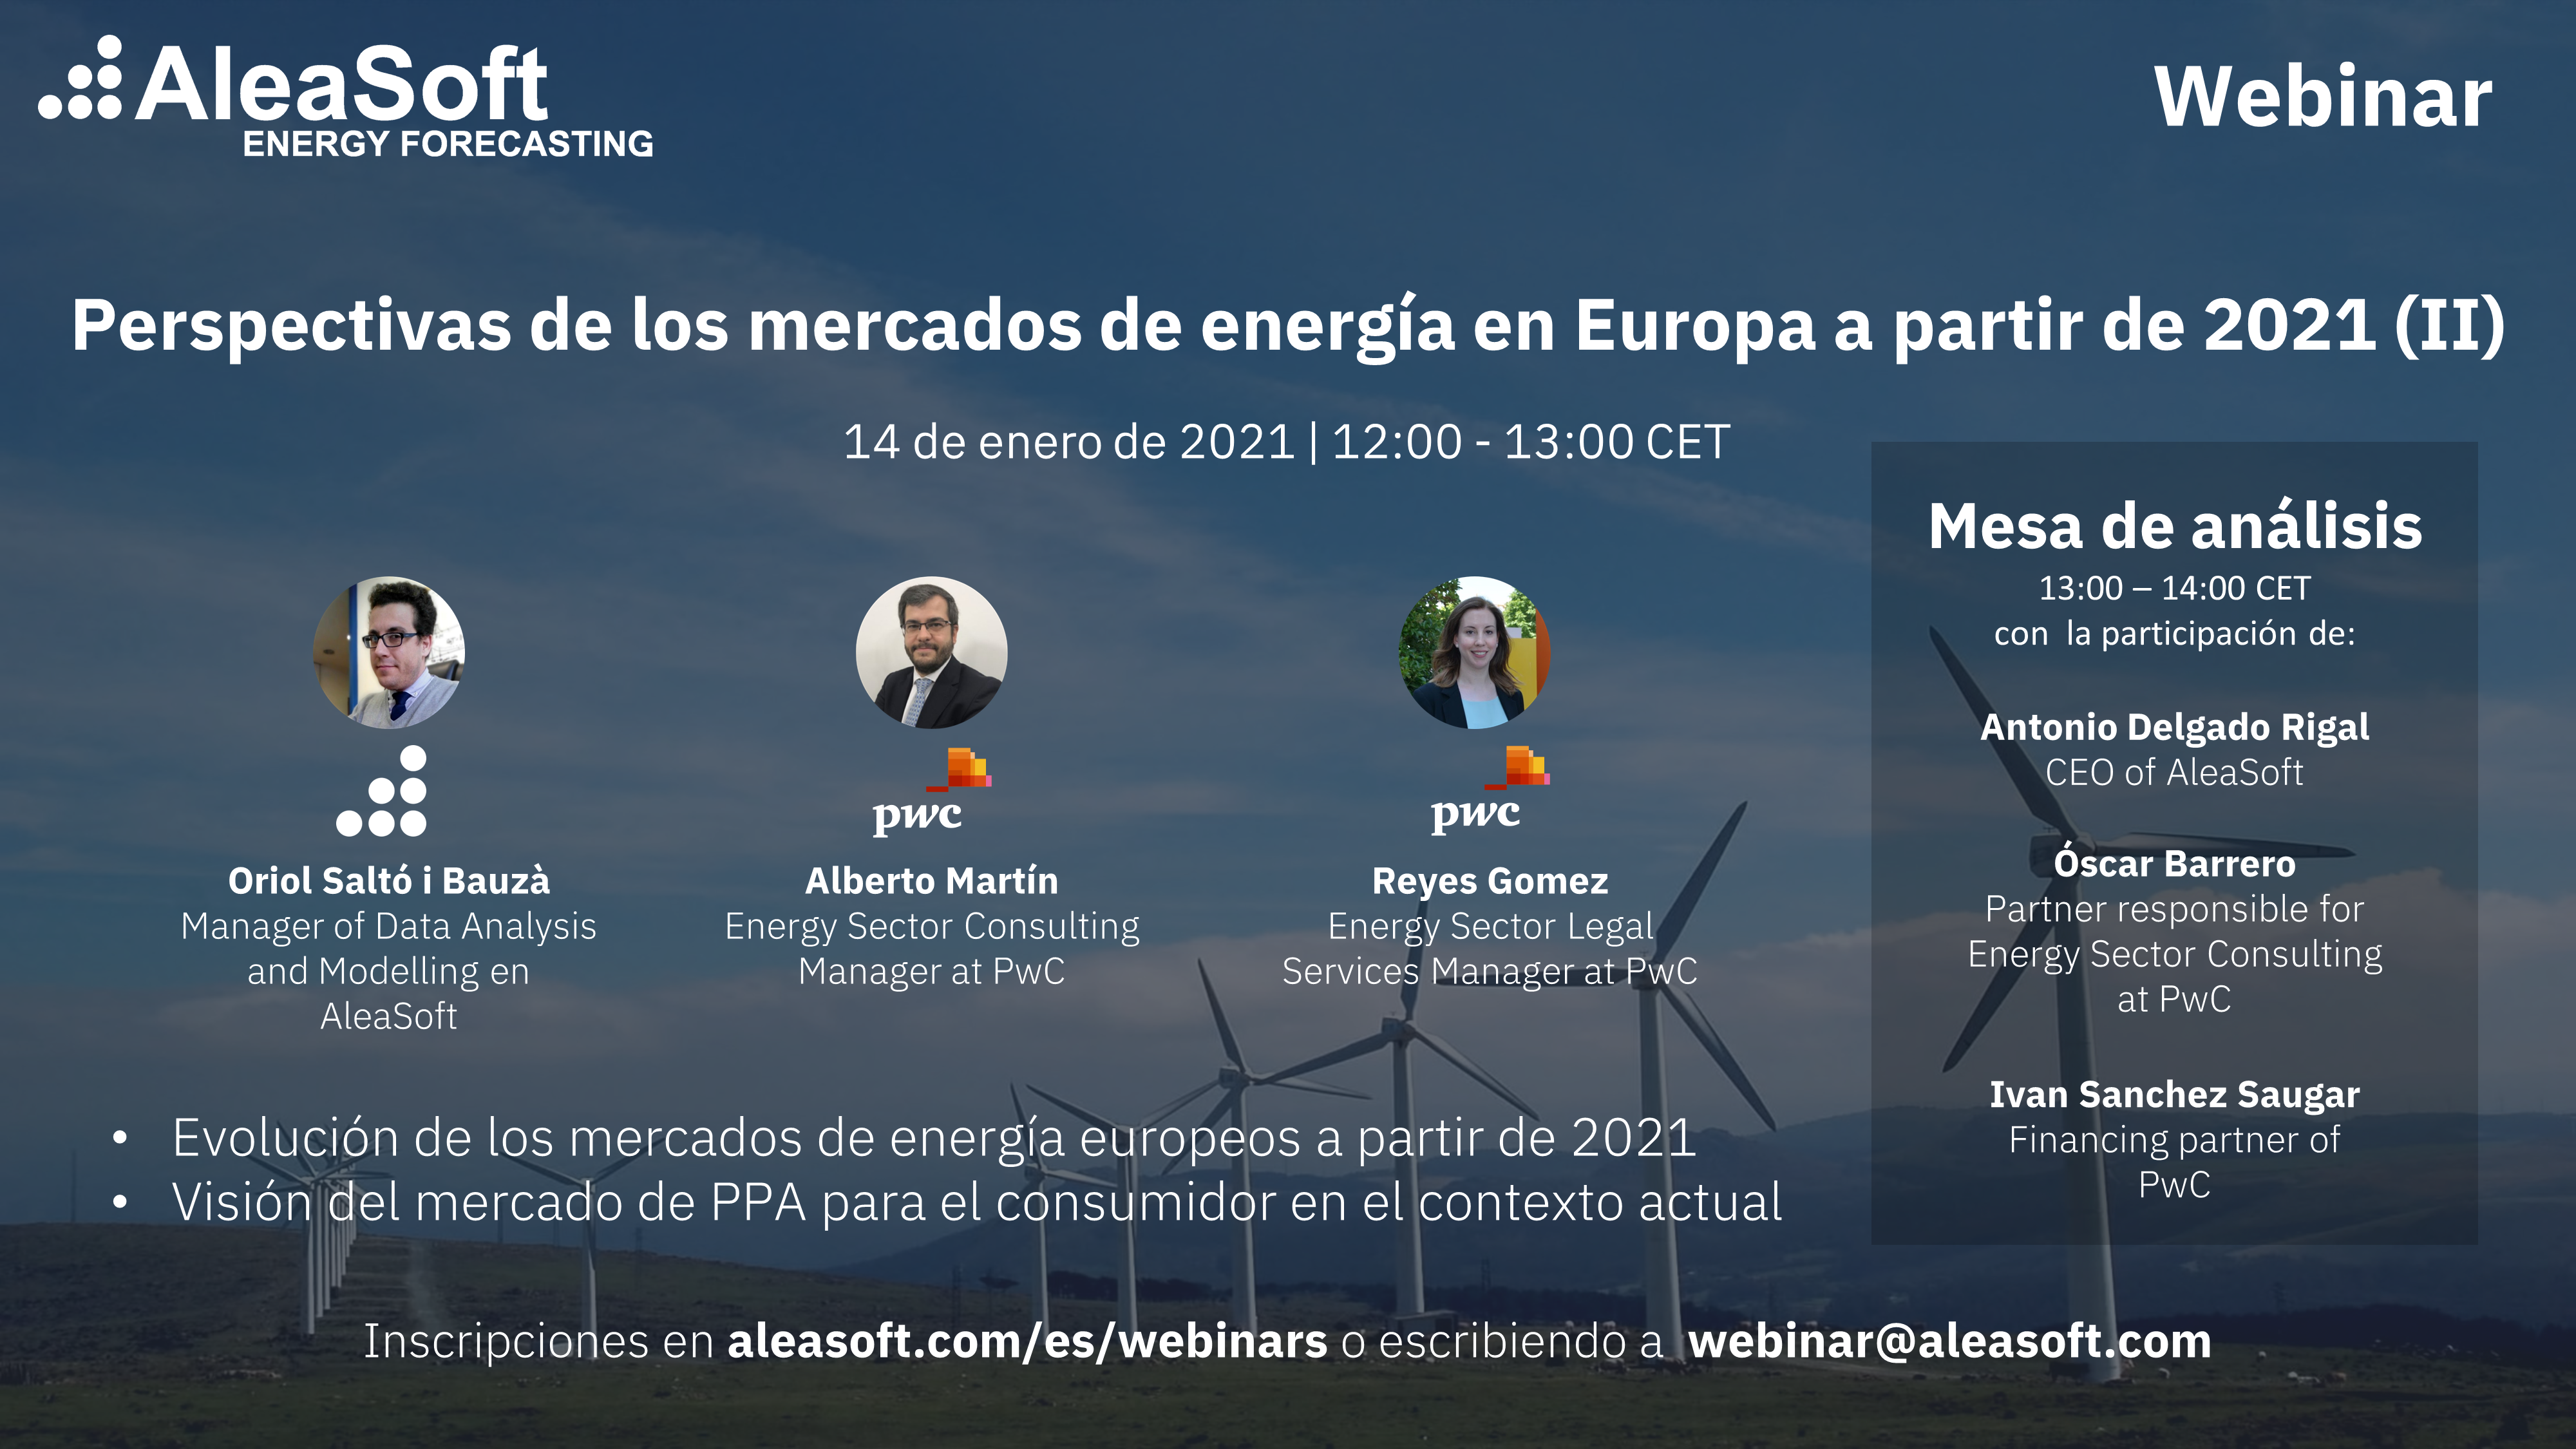 AleaSoft - Webinar Perspectivas mercados energia Europa